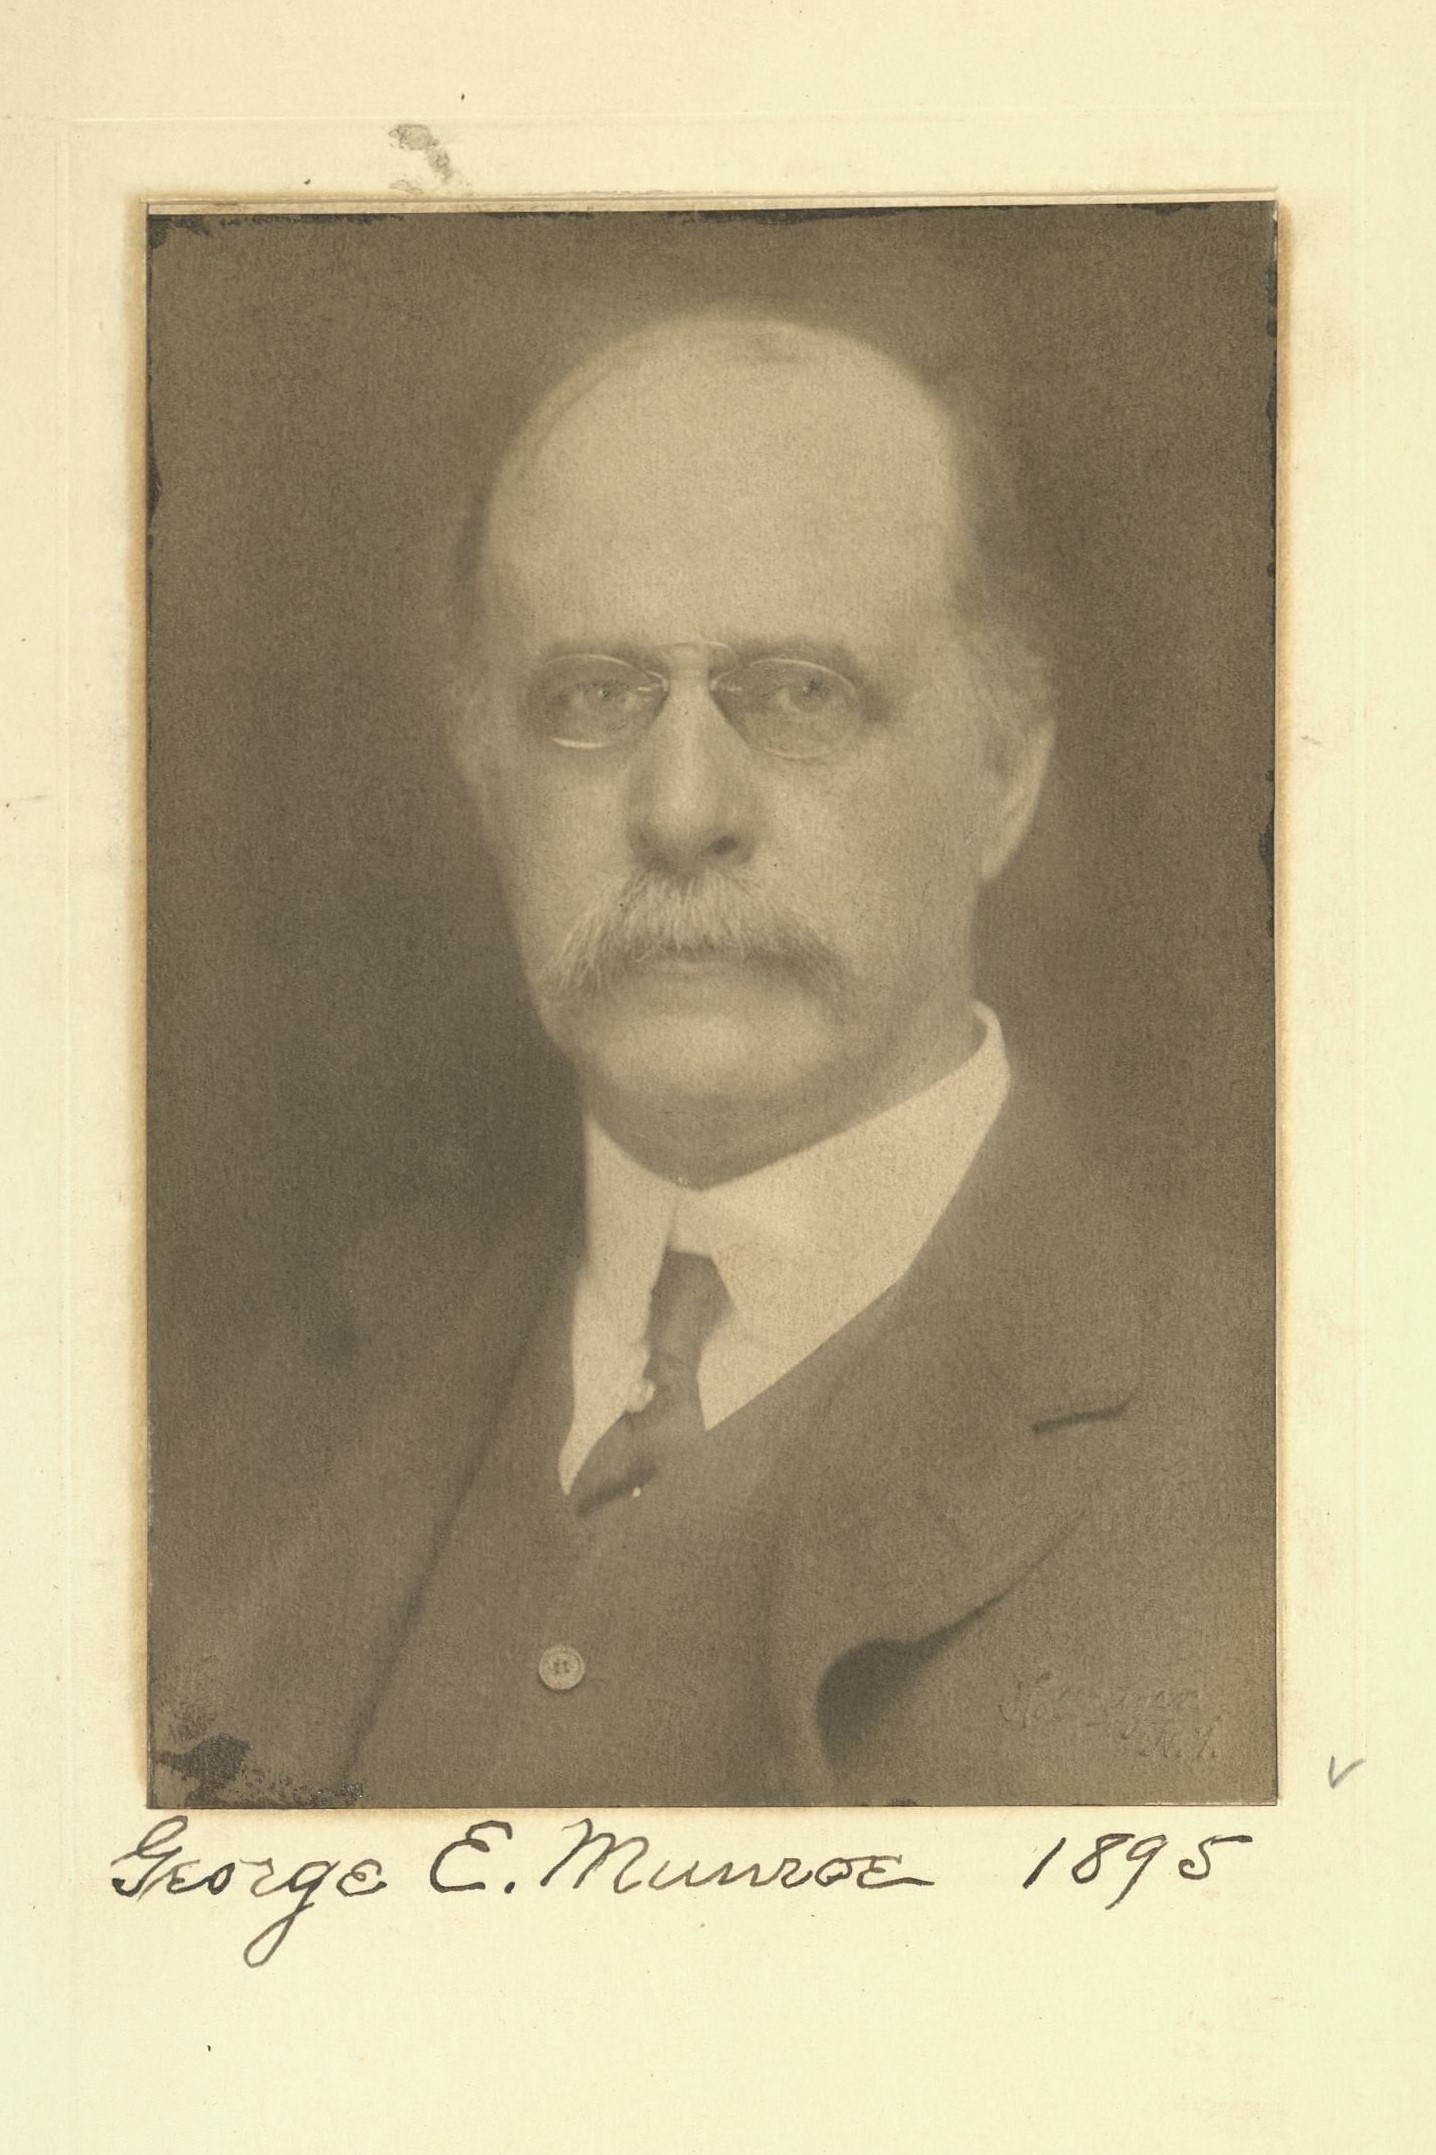 Member portrait of George E. Munroe